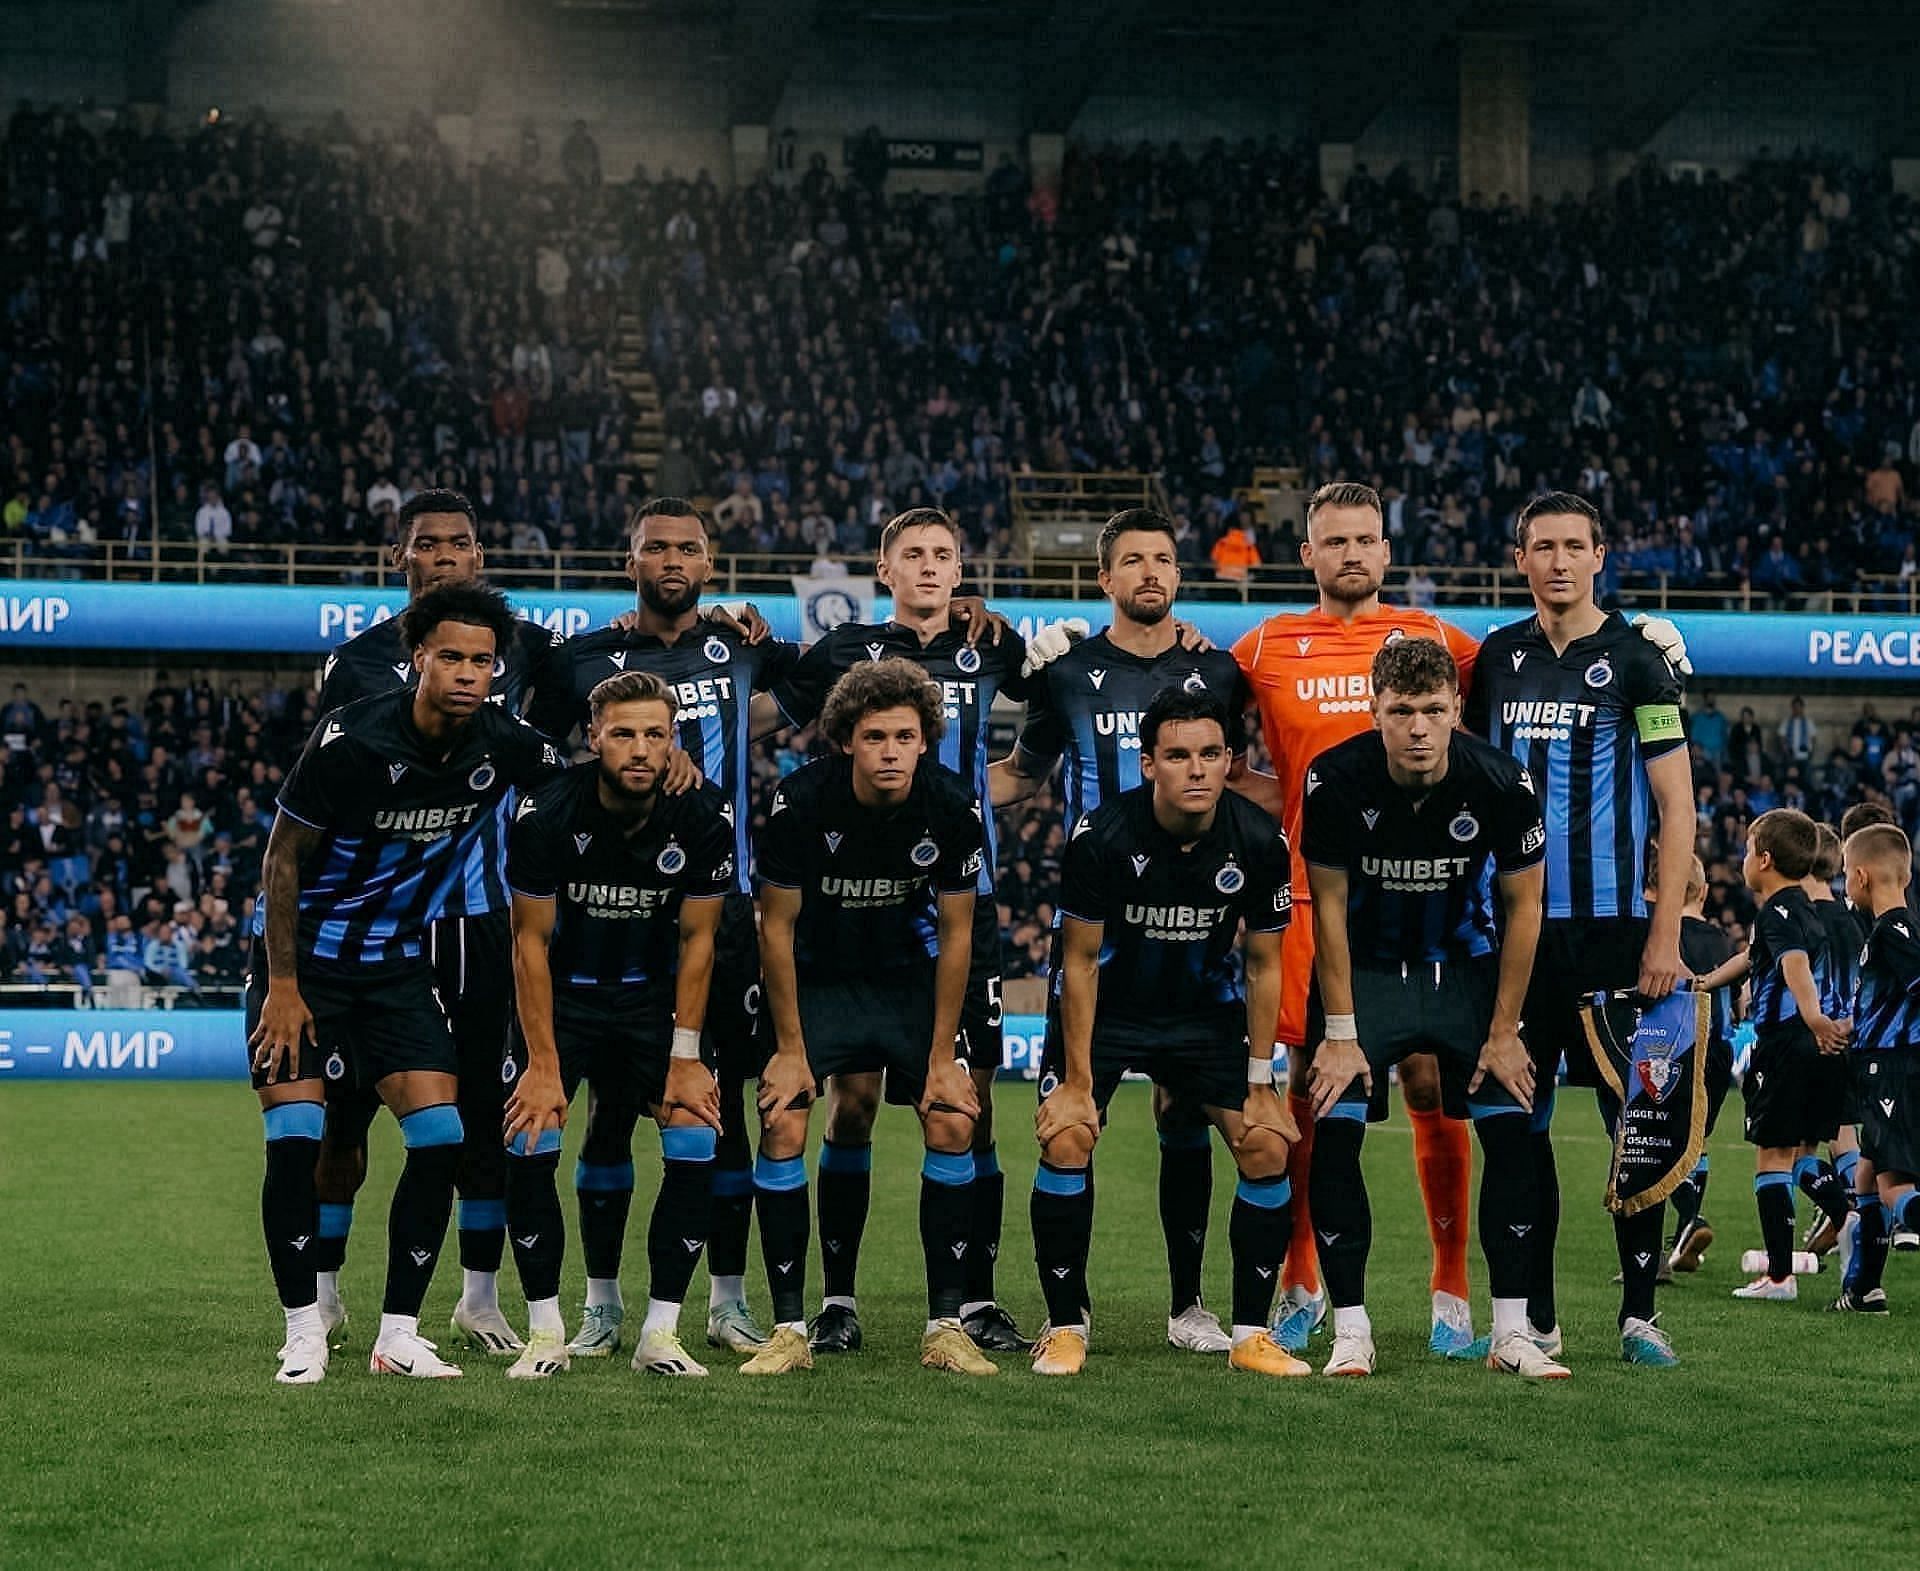 Club Brugge vs Lugano Prediction and Betting Tips